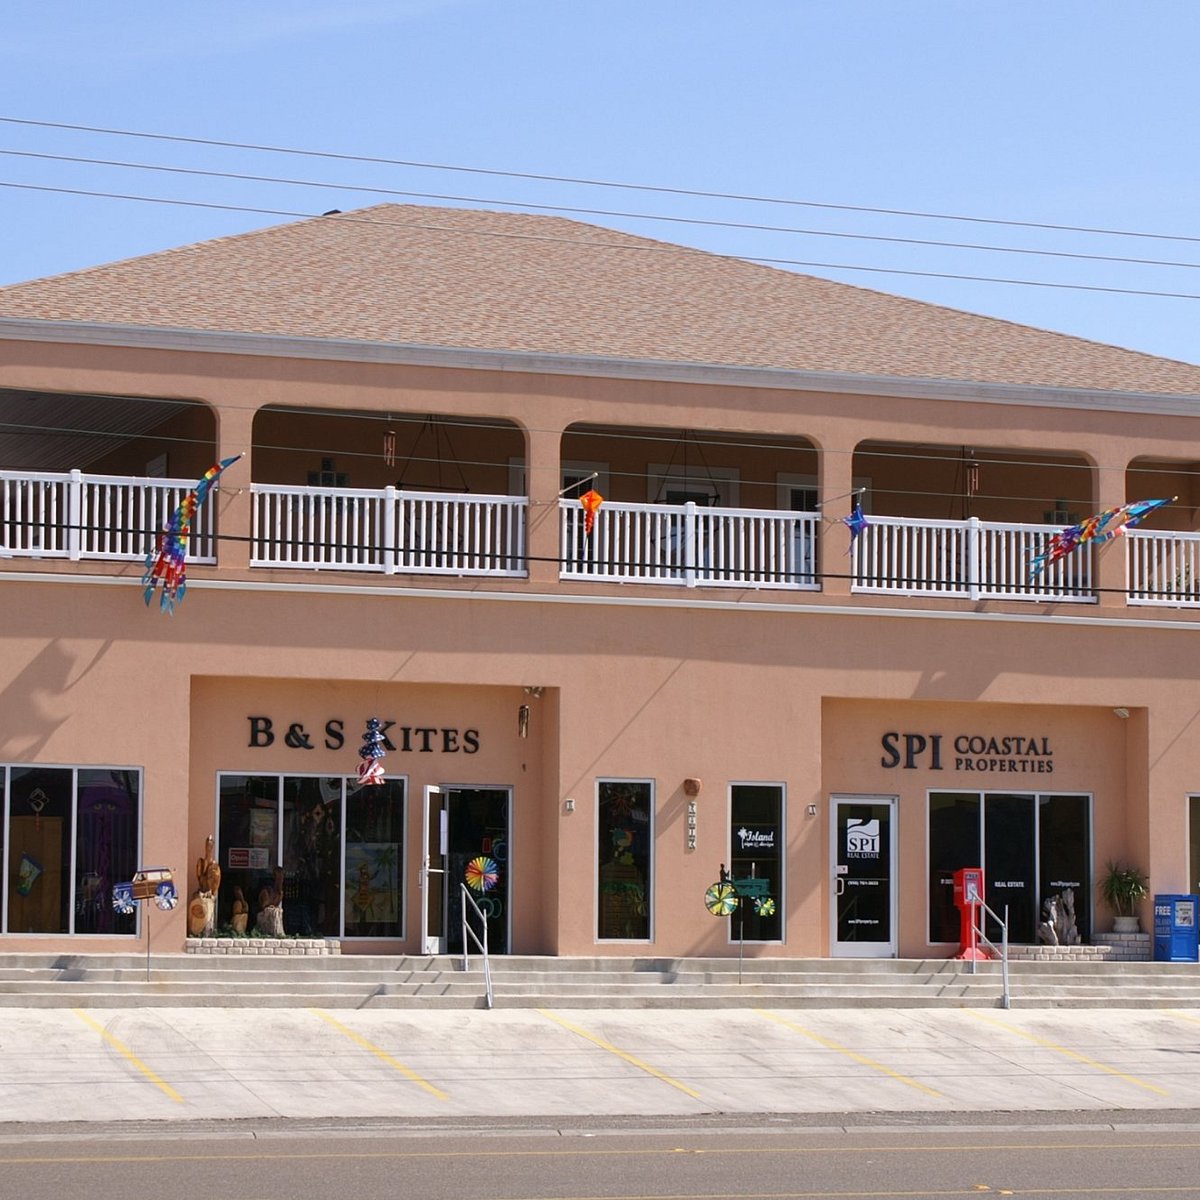 Продажа Kites в г. Bolivar Beach, Texas